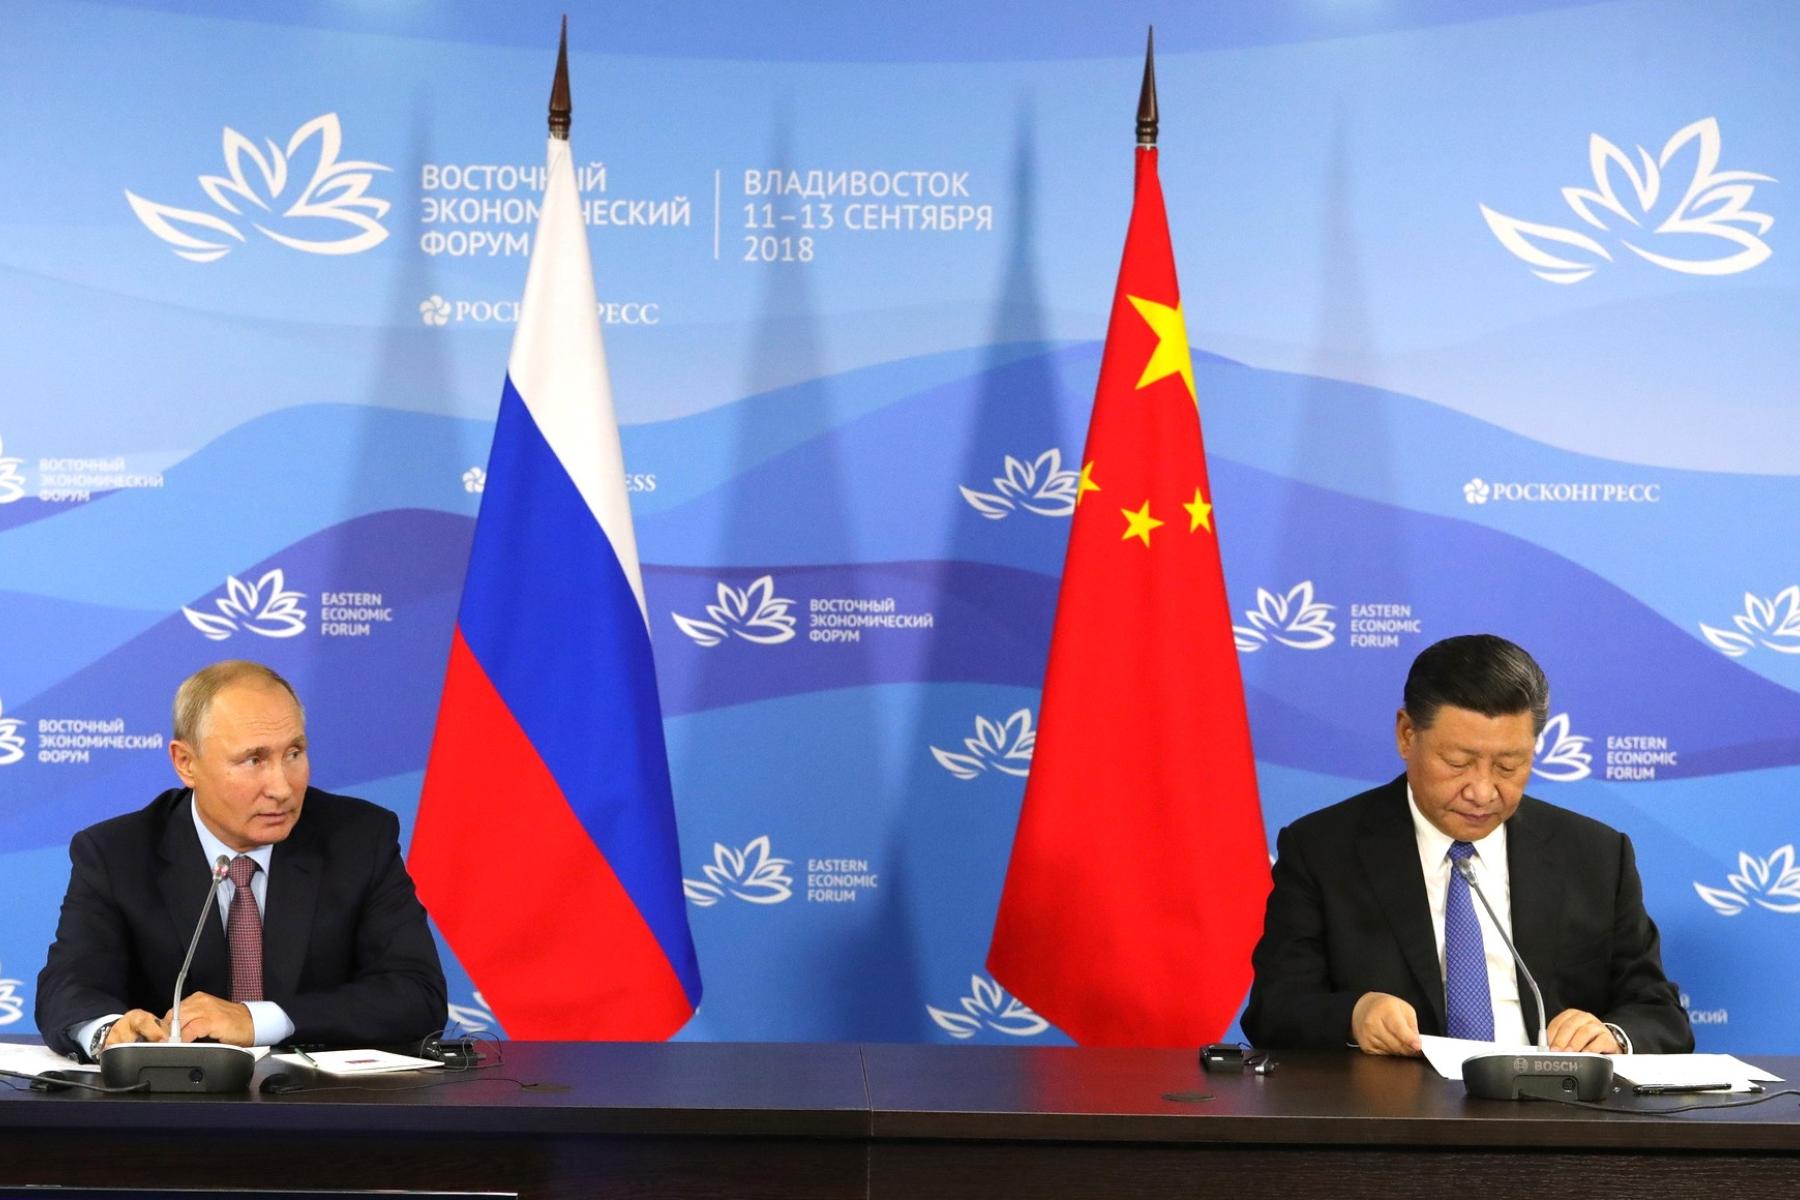 President Putin and President Xi Jinping